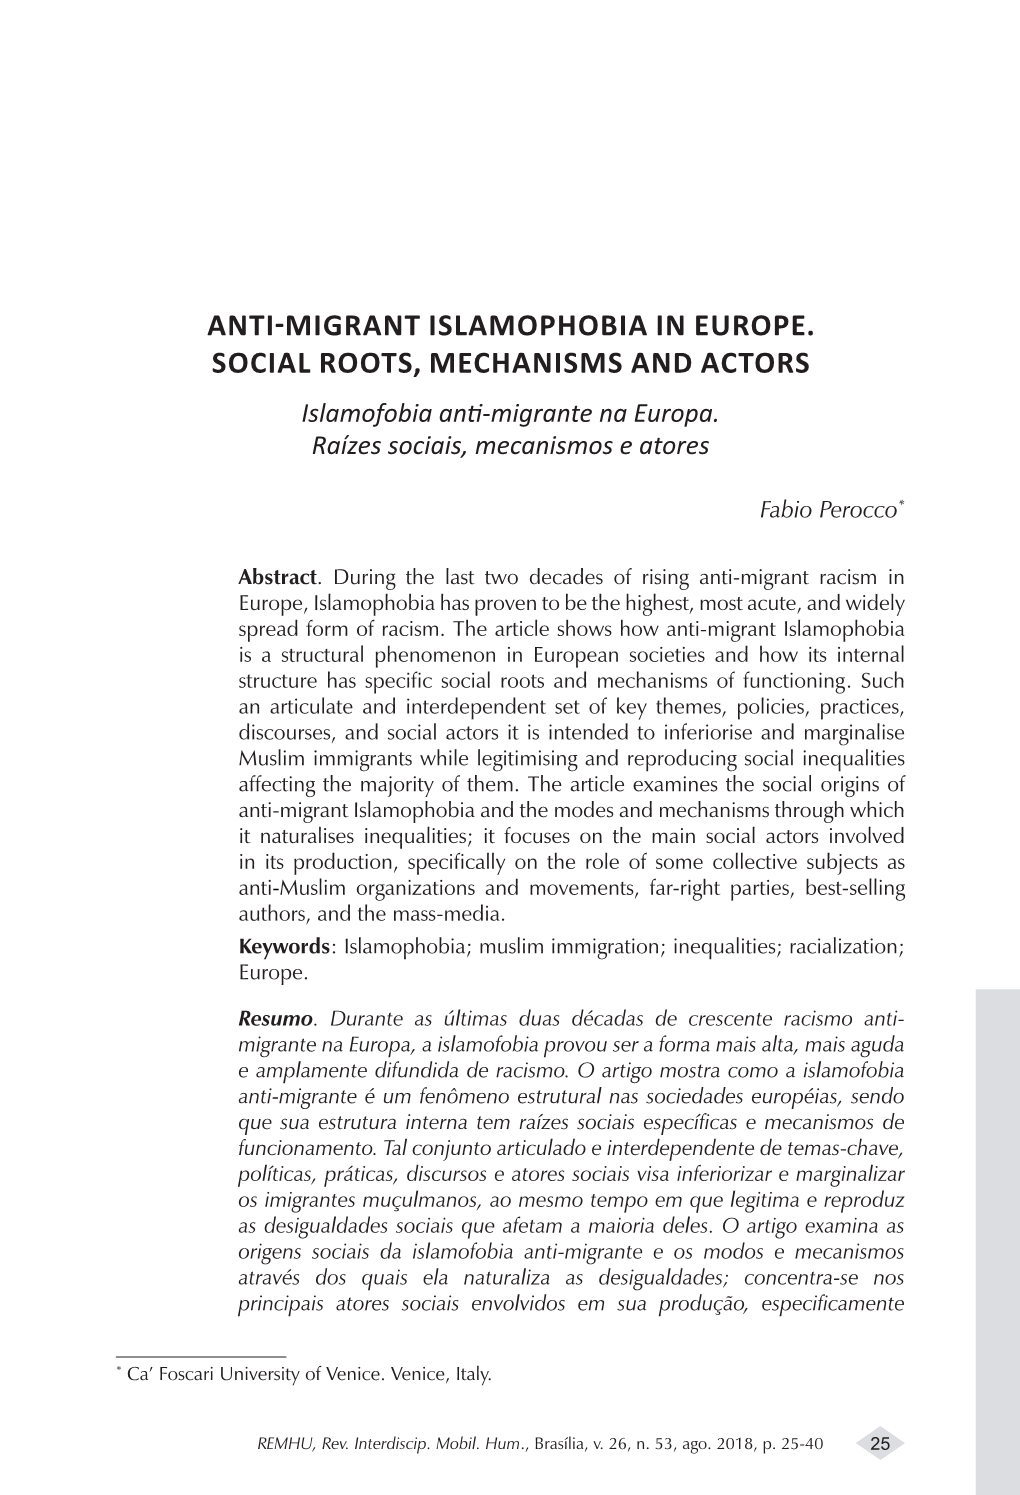 ANTI-MIGRANT ISLAMOPHOBIA in EUROPE. SOCIAL ROOTS, MECHANISMS and ACTORS Islamofobia Anti-Migrante Na Europa